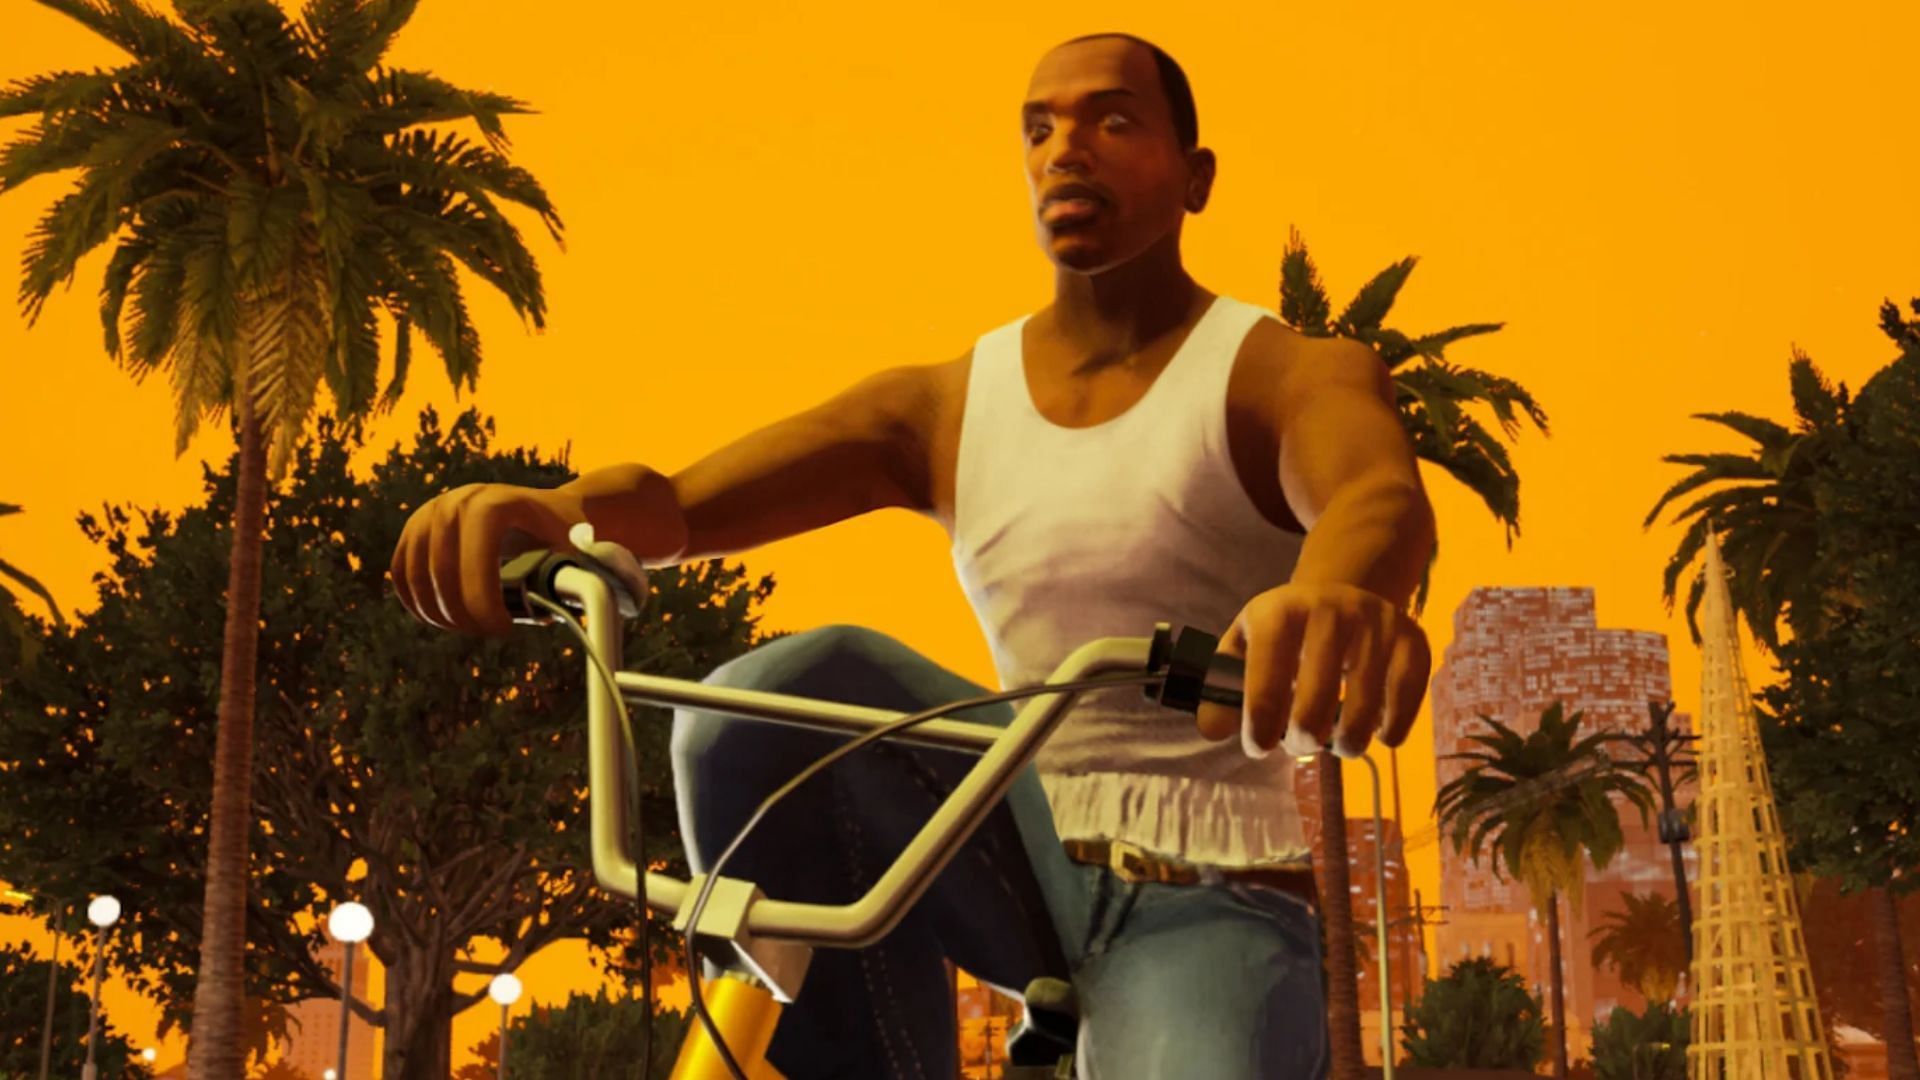 Grand Theft Auto San Andreas Definitive Edition on mobile via Netflix restores the original lighting (Image via Rockstar Games)